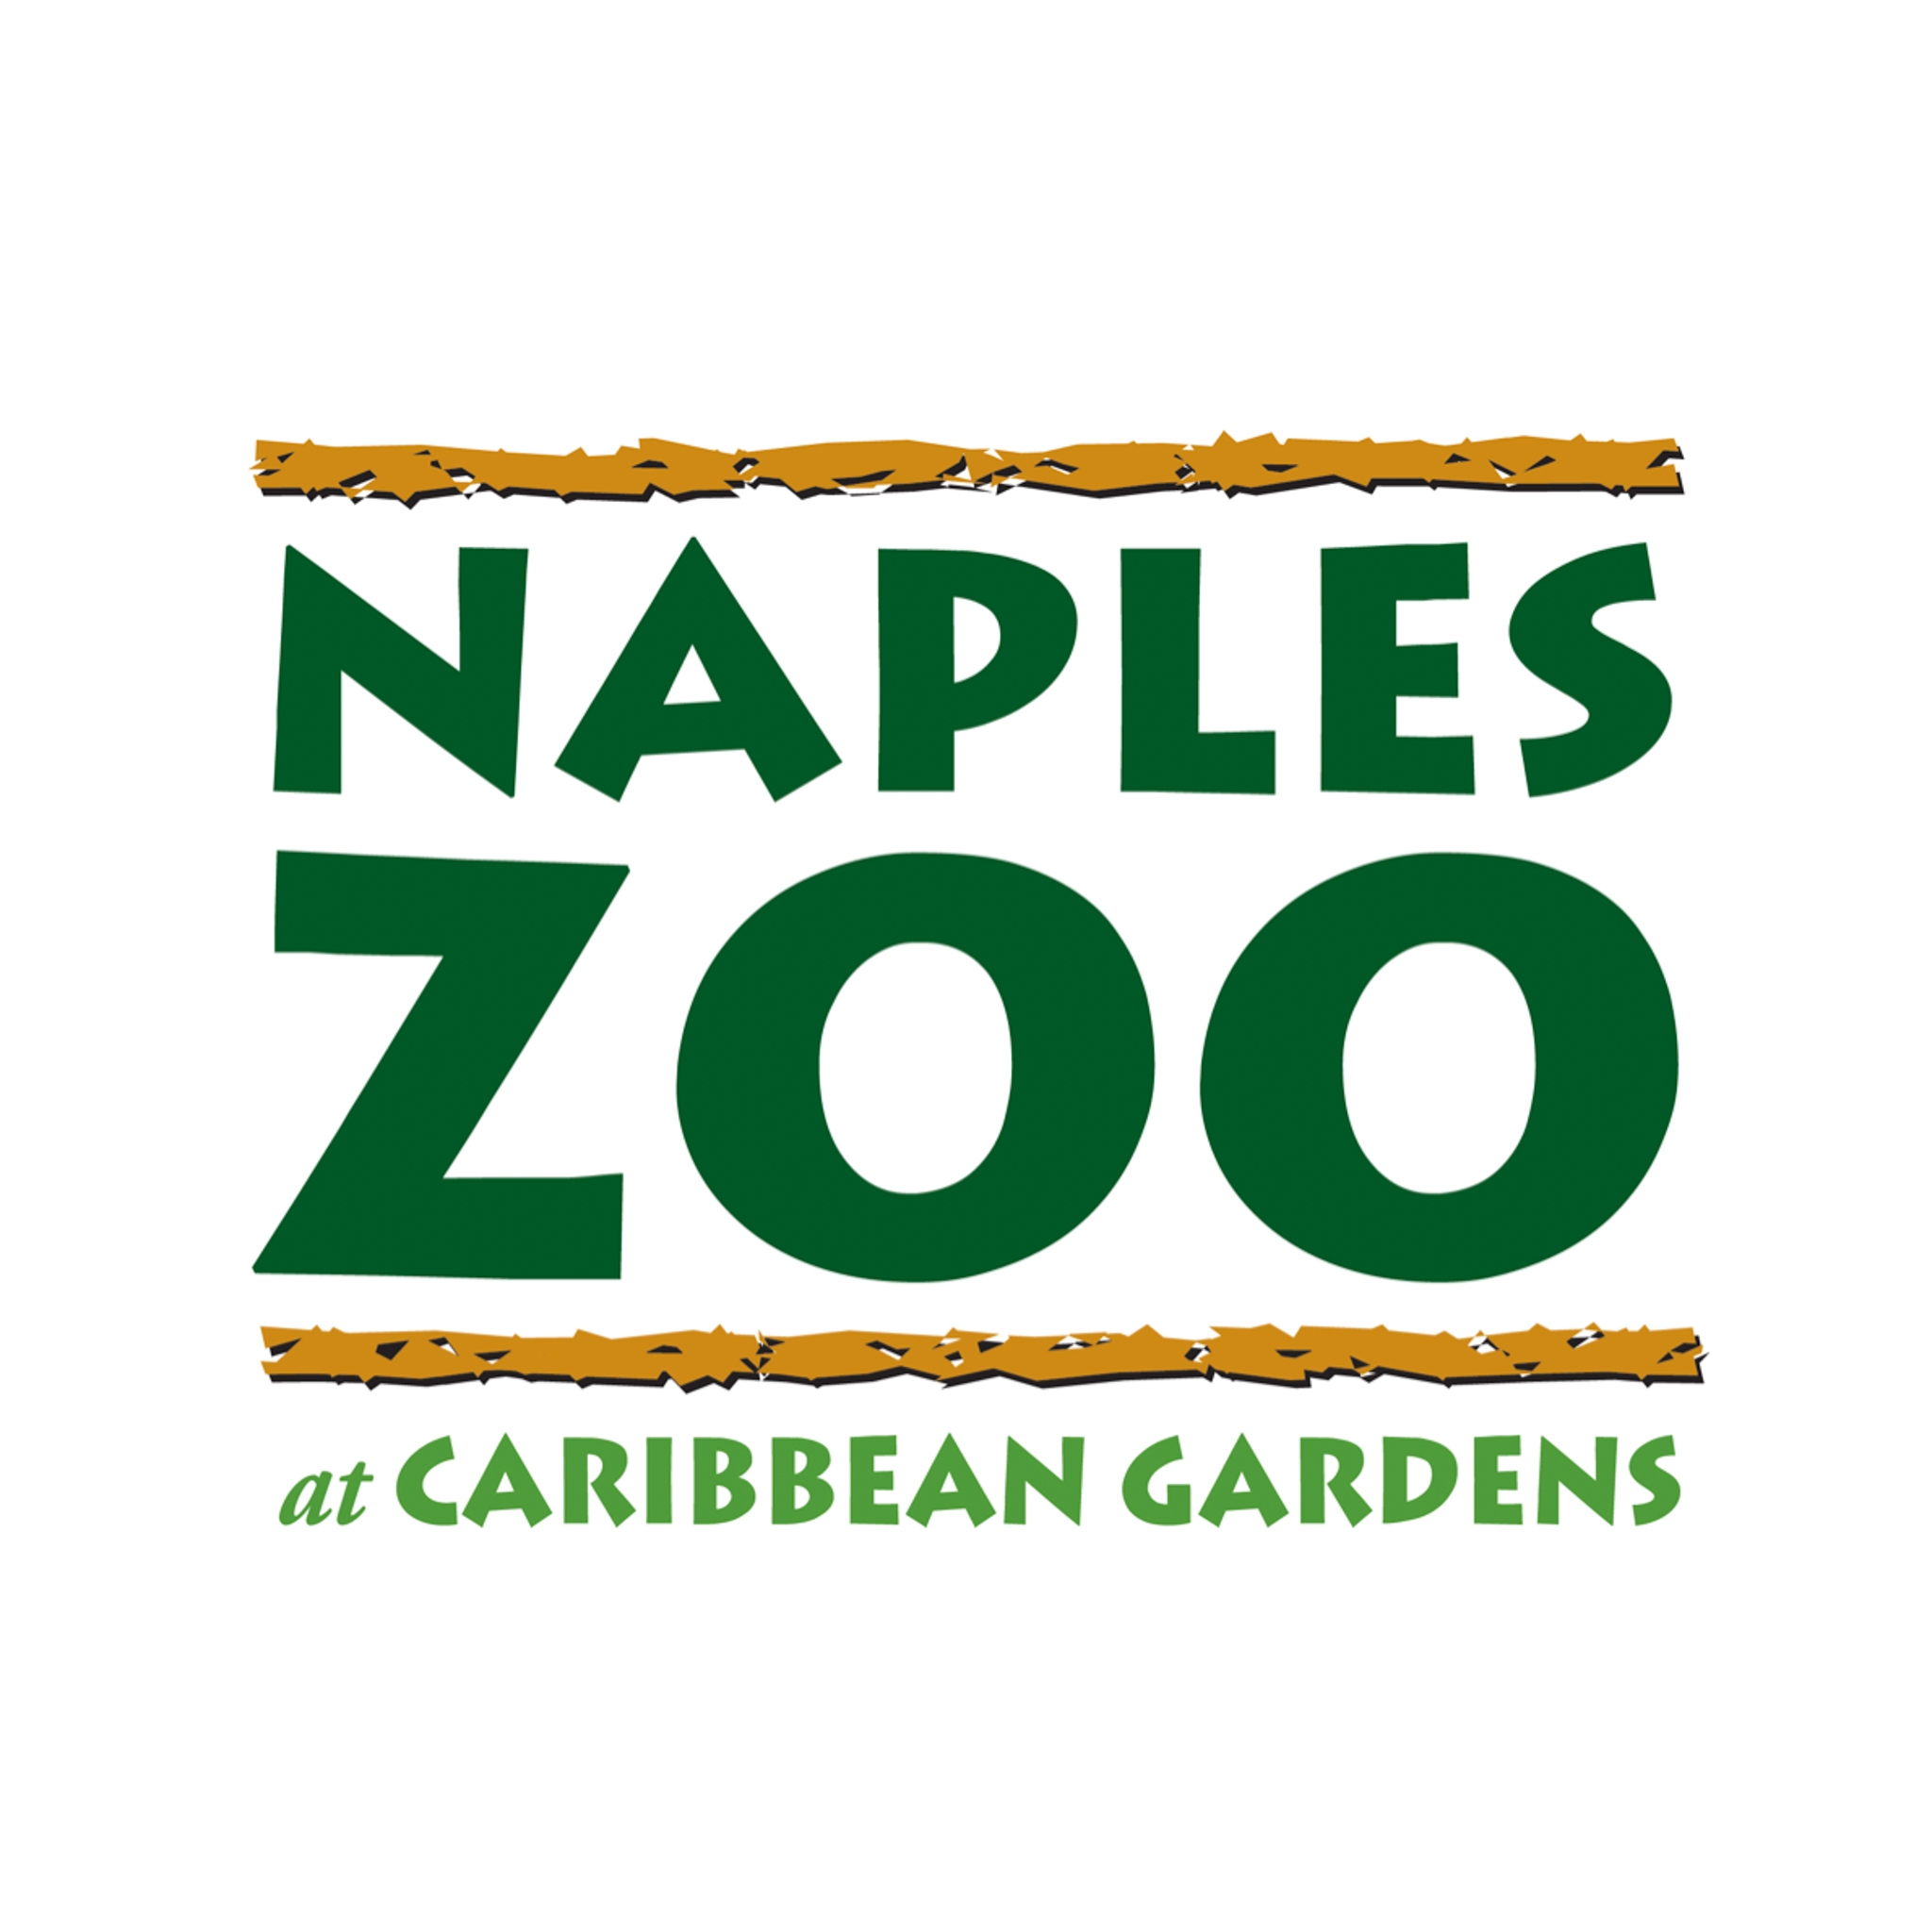 Naples Zoo at Caribbean Gardens|Park|Travel